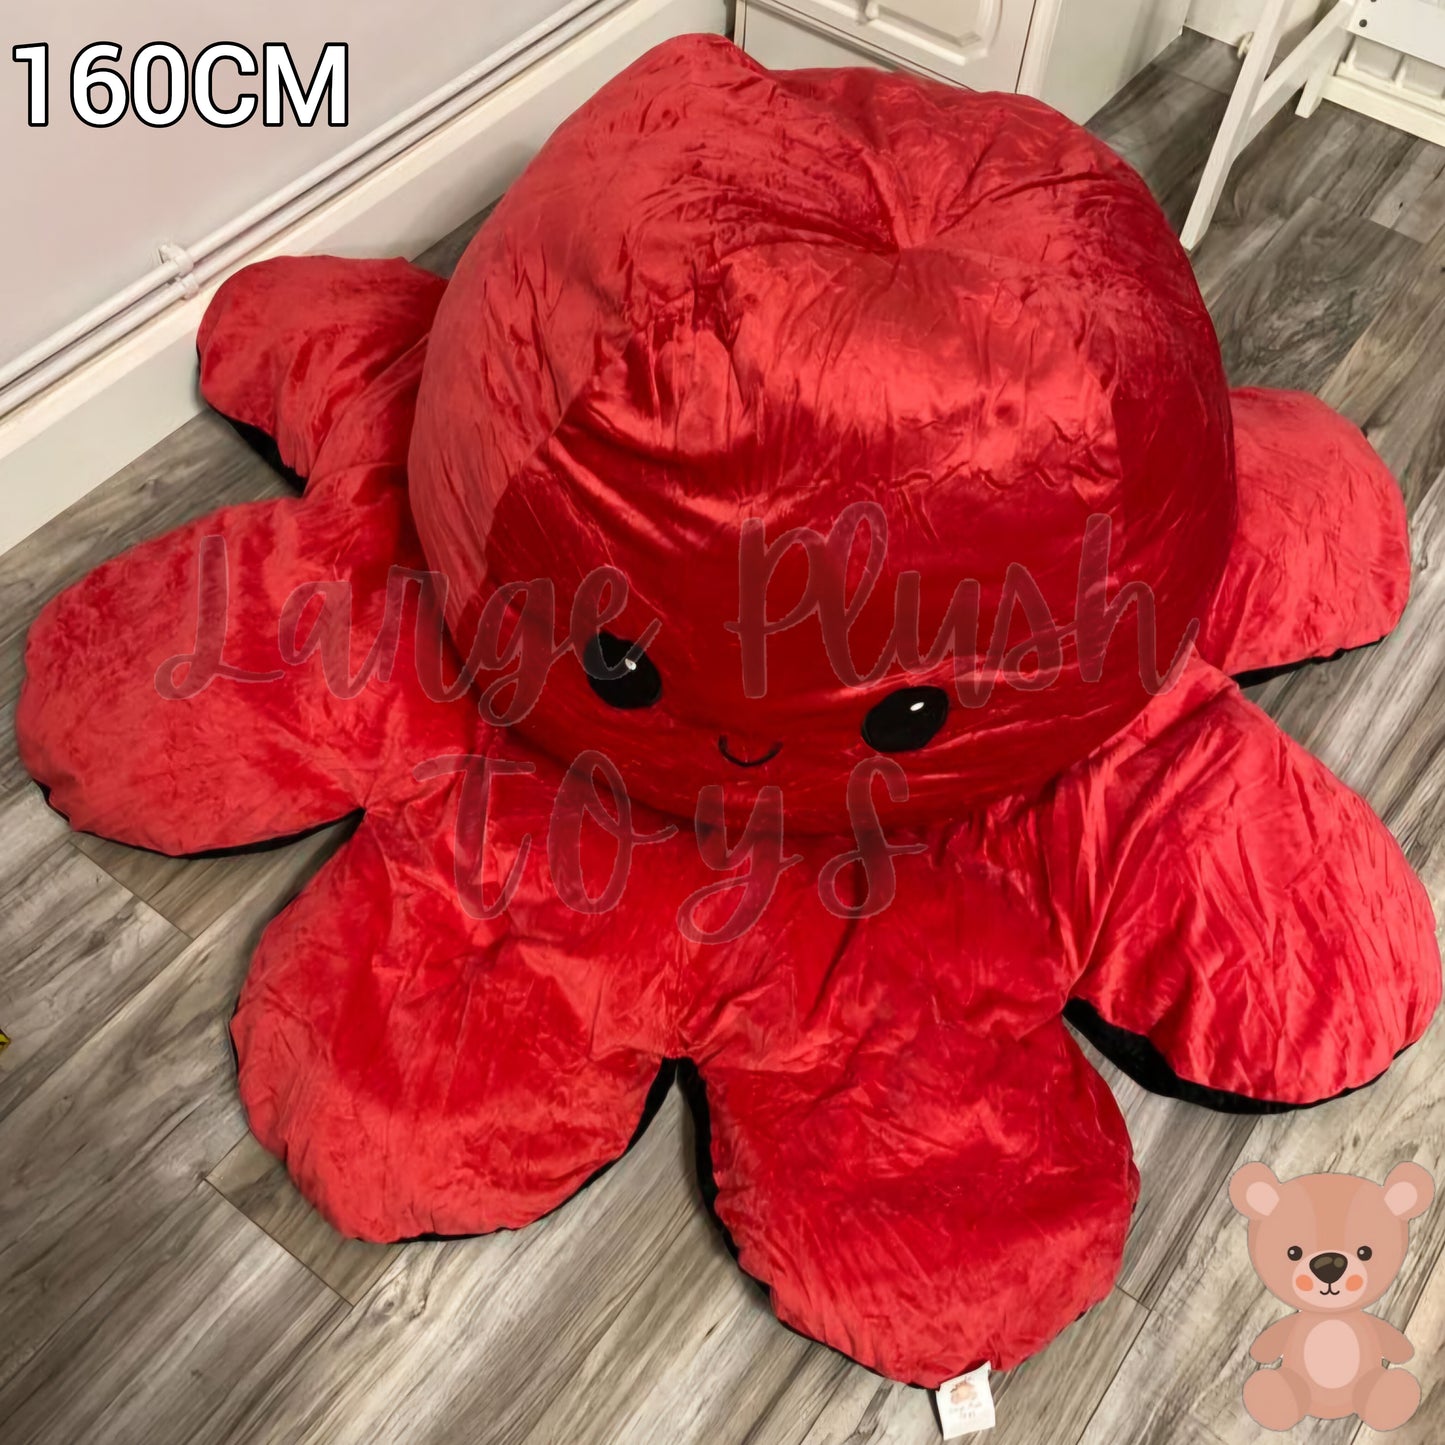 Red/Black Reversible Octopus